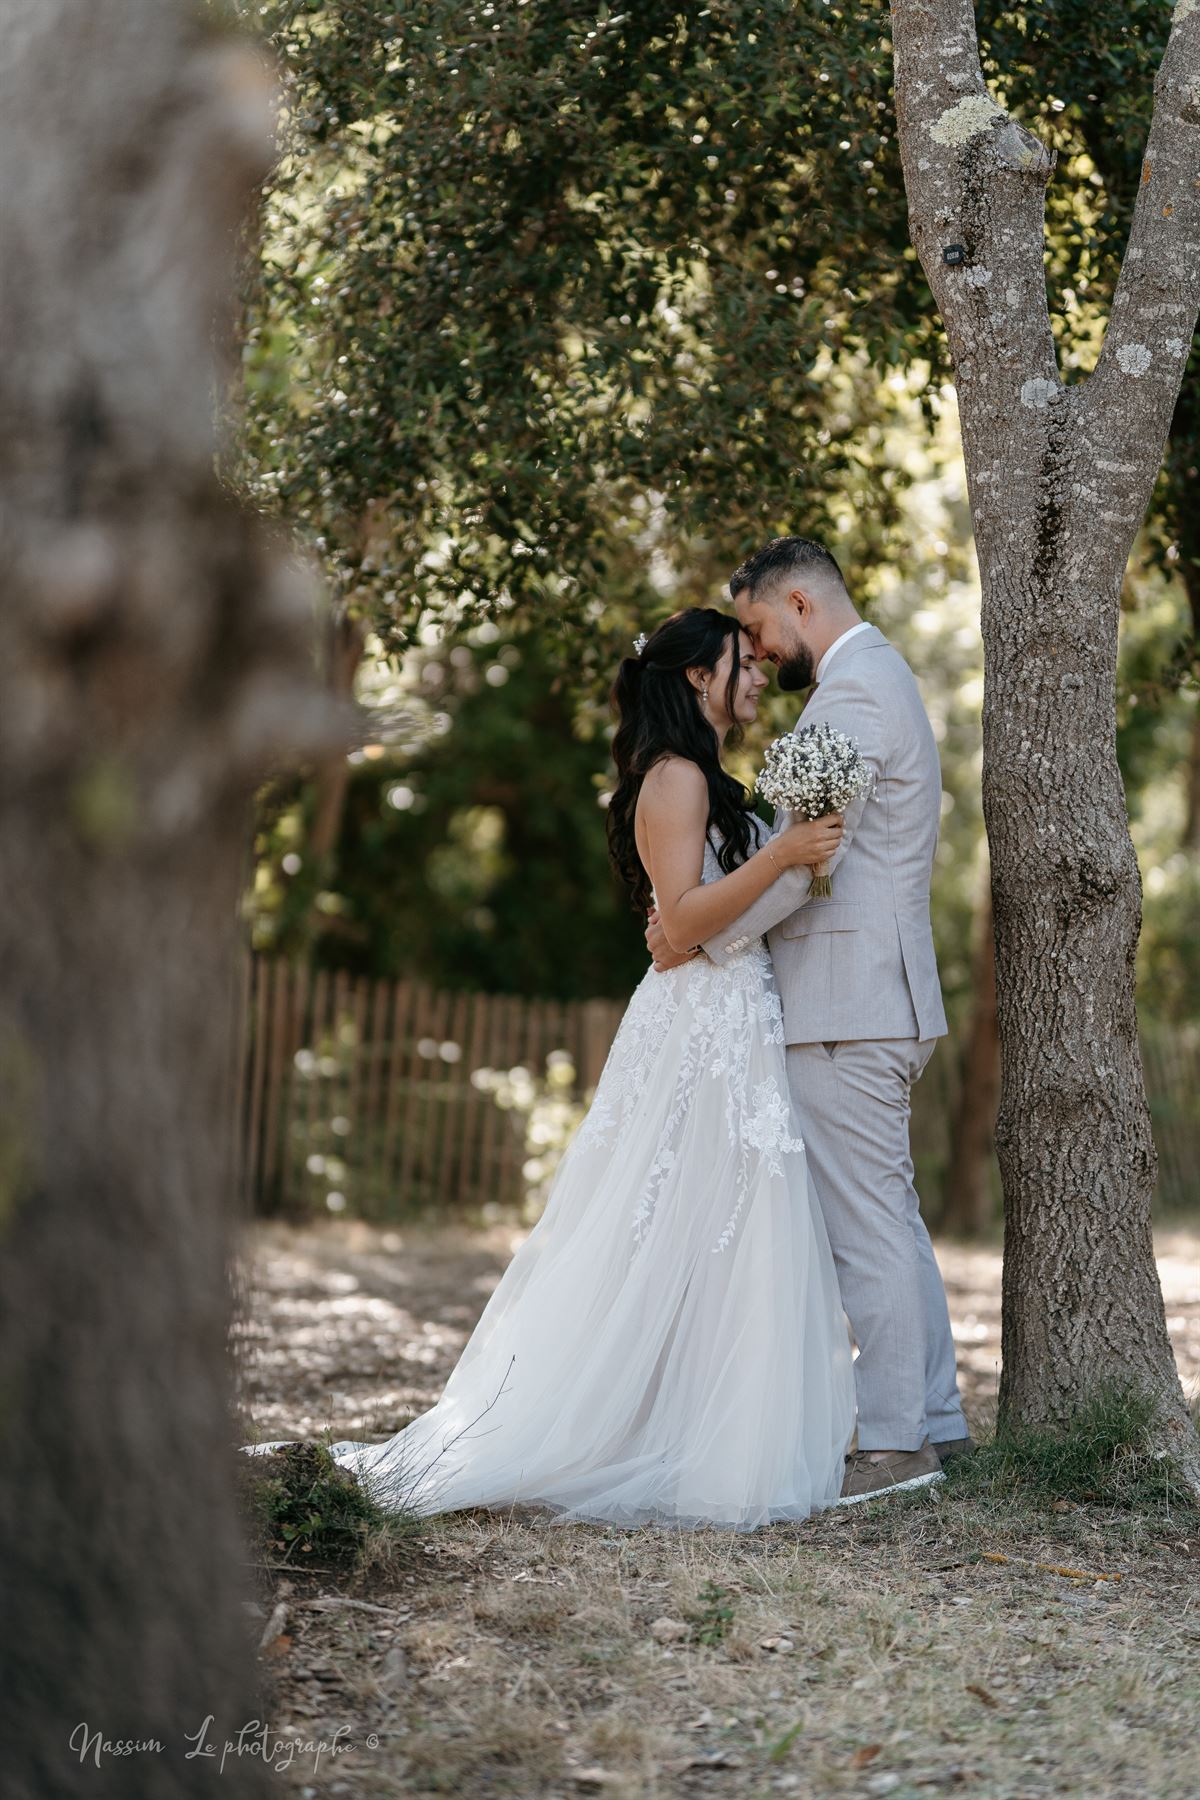 Wedding Photographer Aix en Provence: Capturing Love's Embrace 14